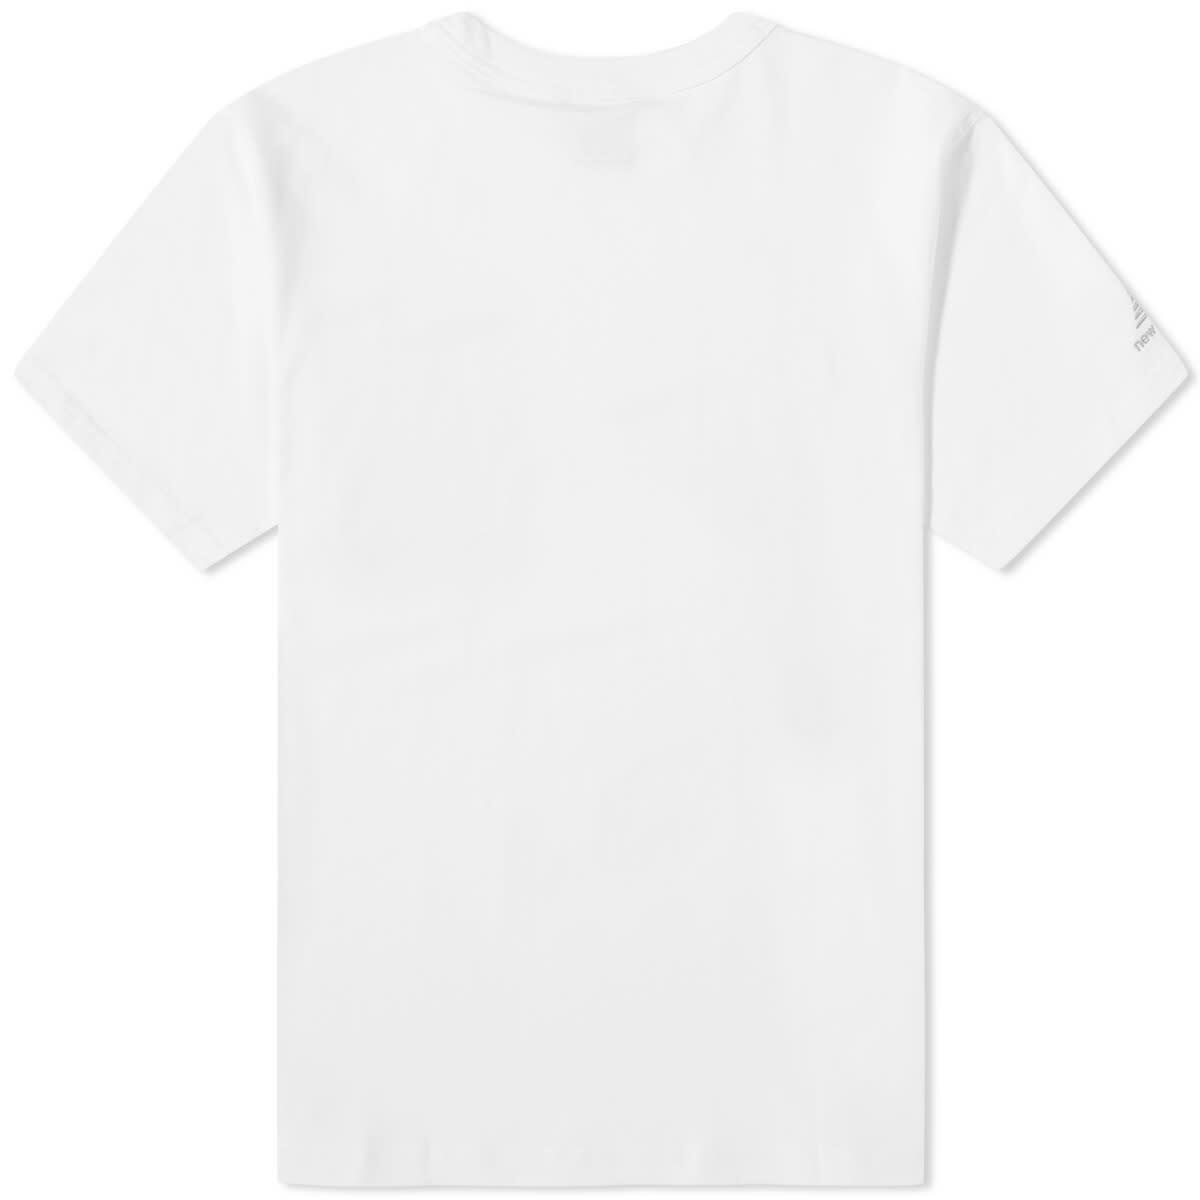 New Balance in New x White Paul Rich T-Shirt Balance